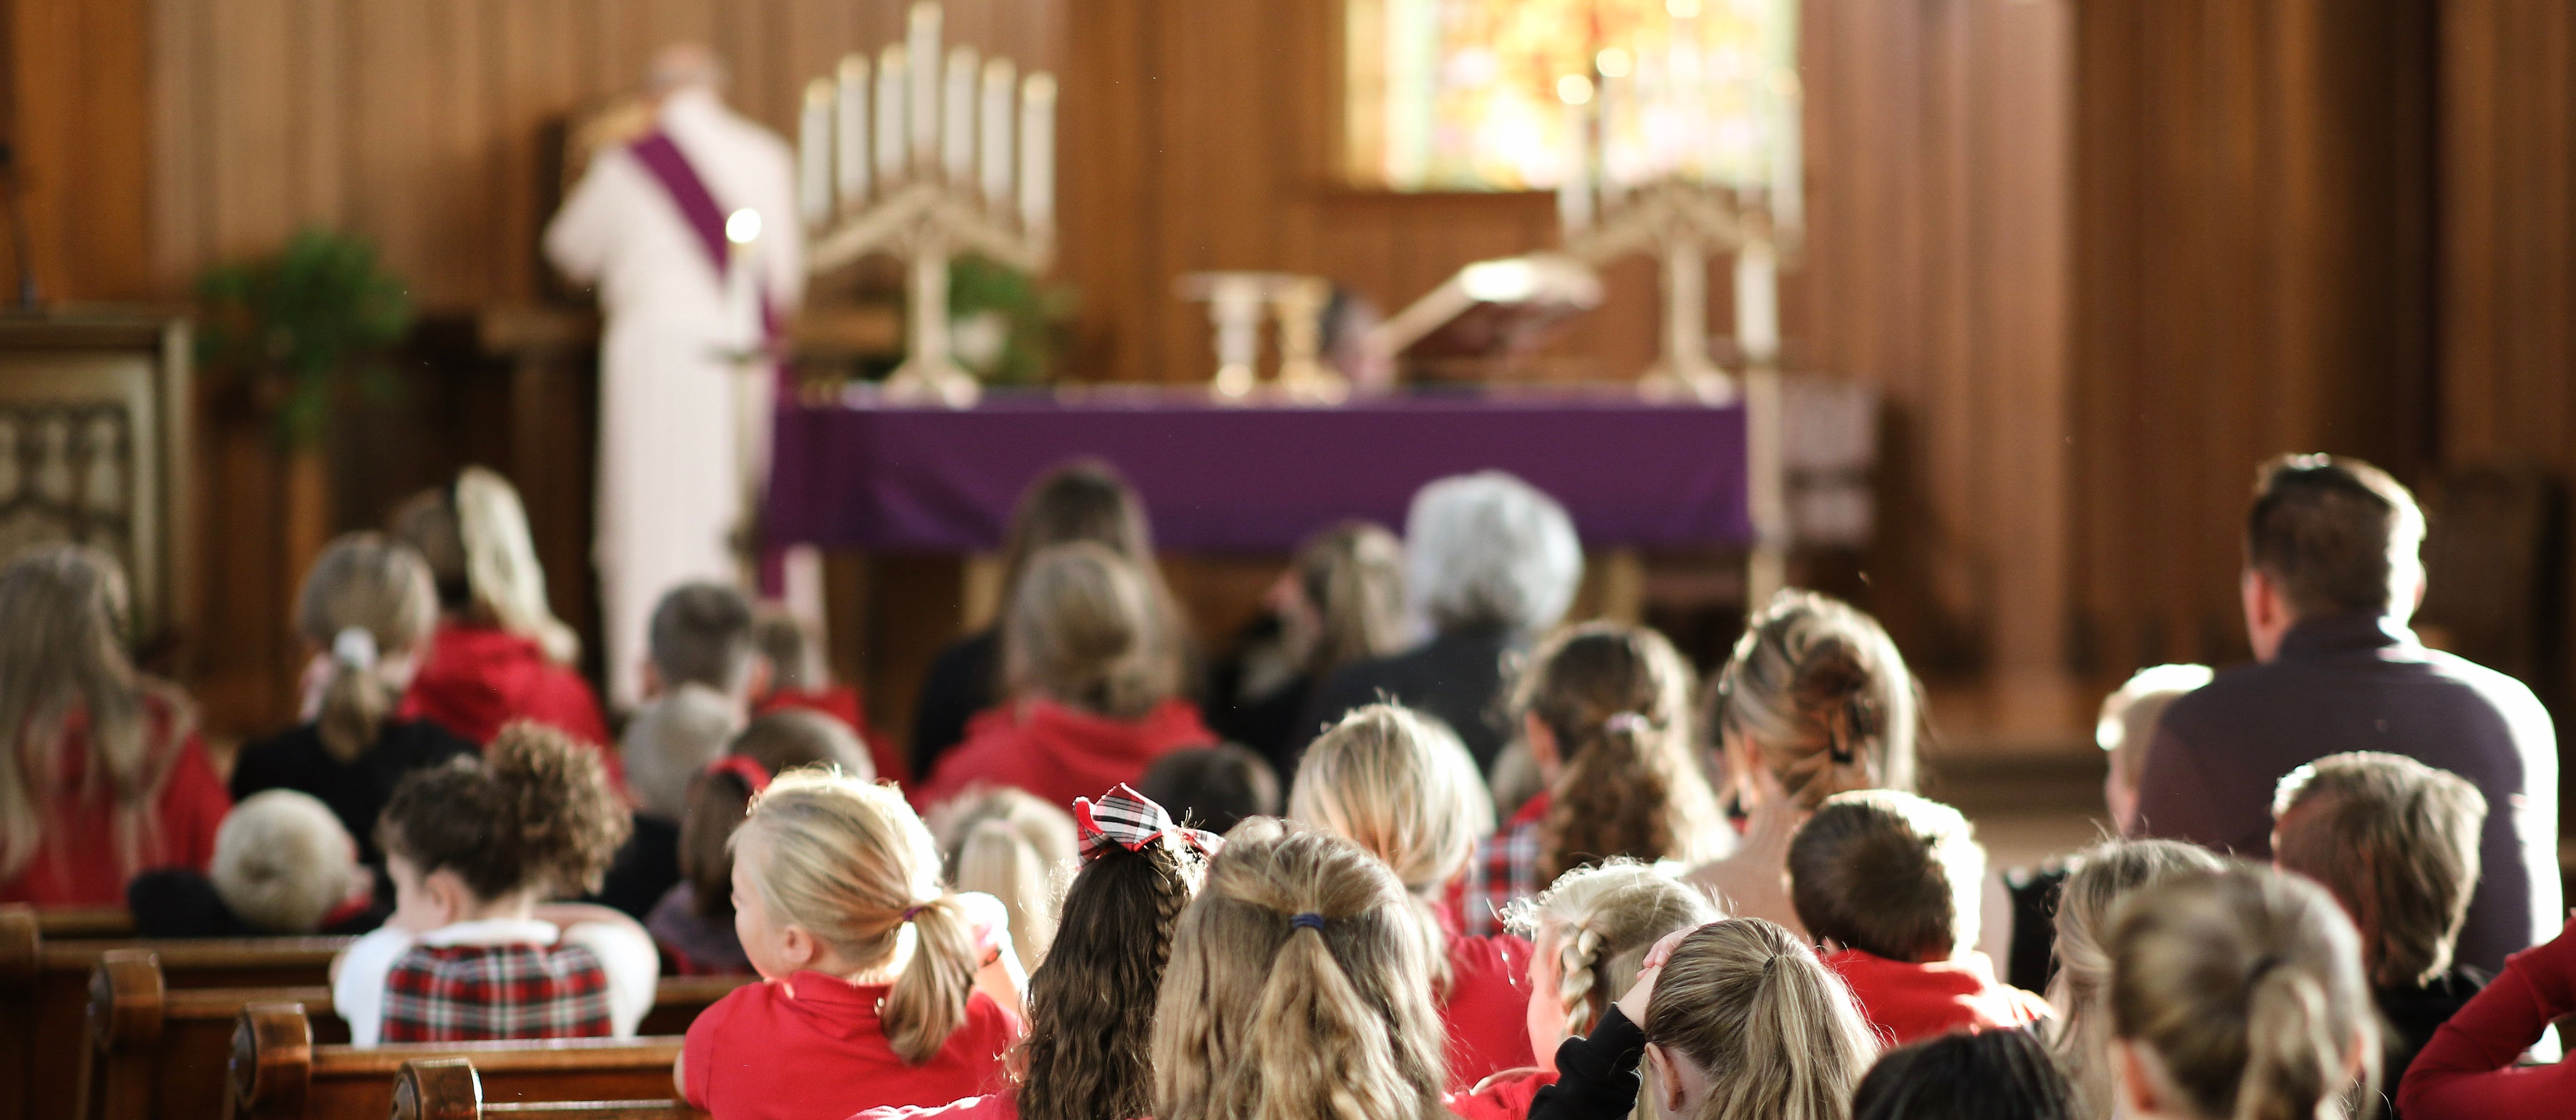 Students praying in church